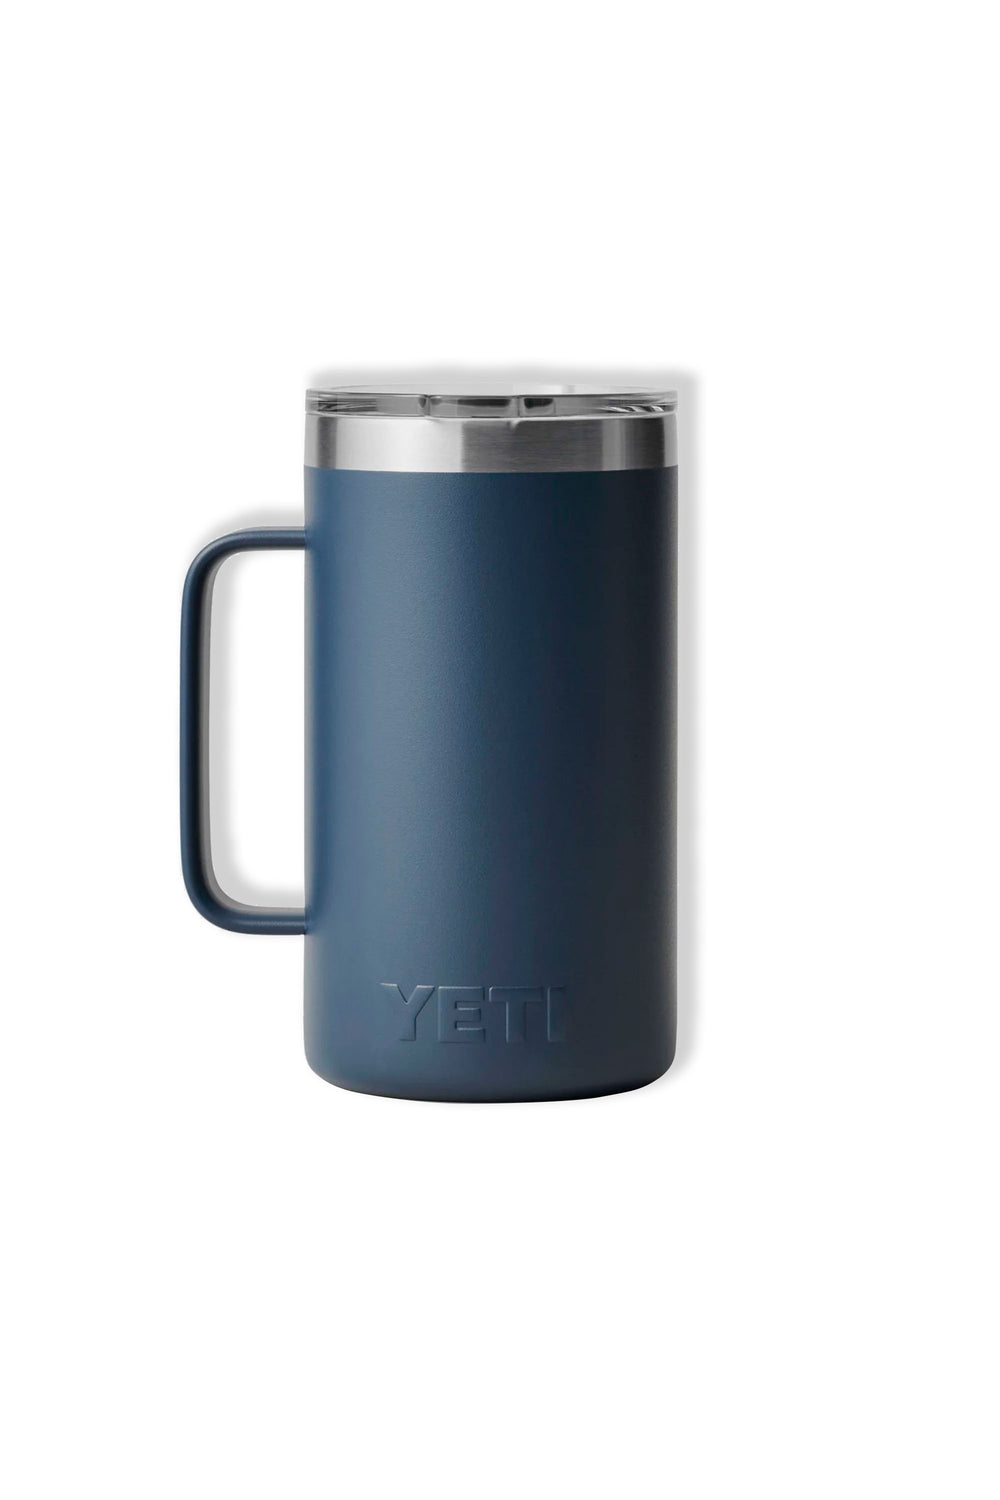 One Yeti Stainless Steel 8 Oz Tumbler Mug with TRAVELERS printed on it